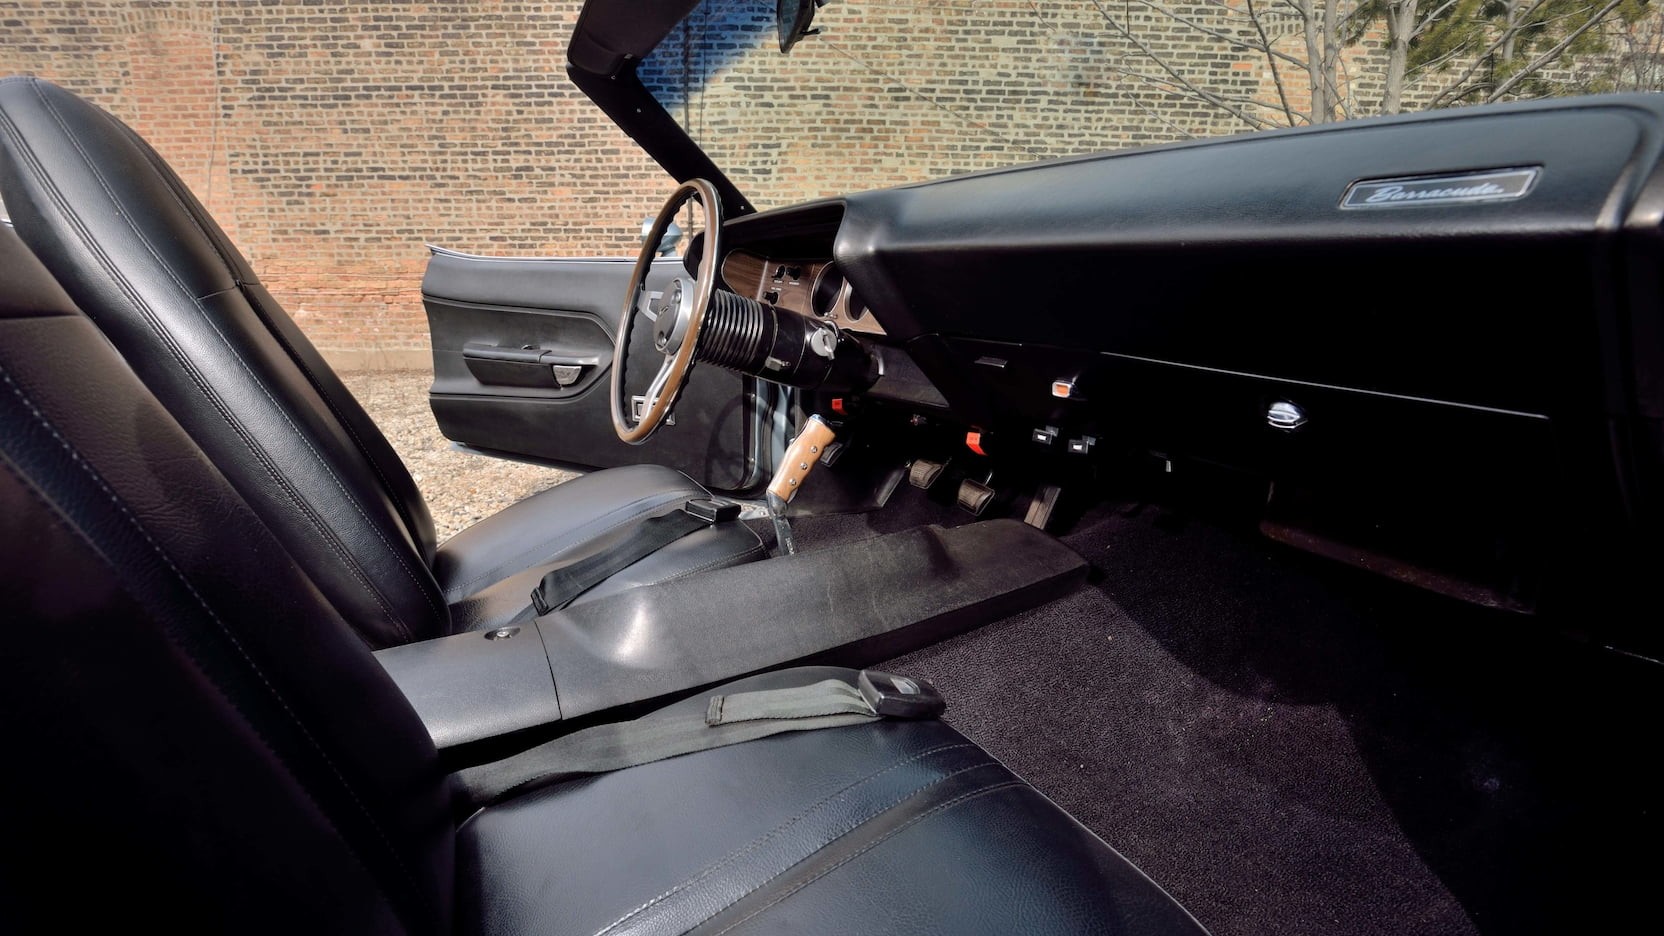 Редкий Plymouth Hemi Cuda 1971 выставили на продажу